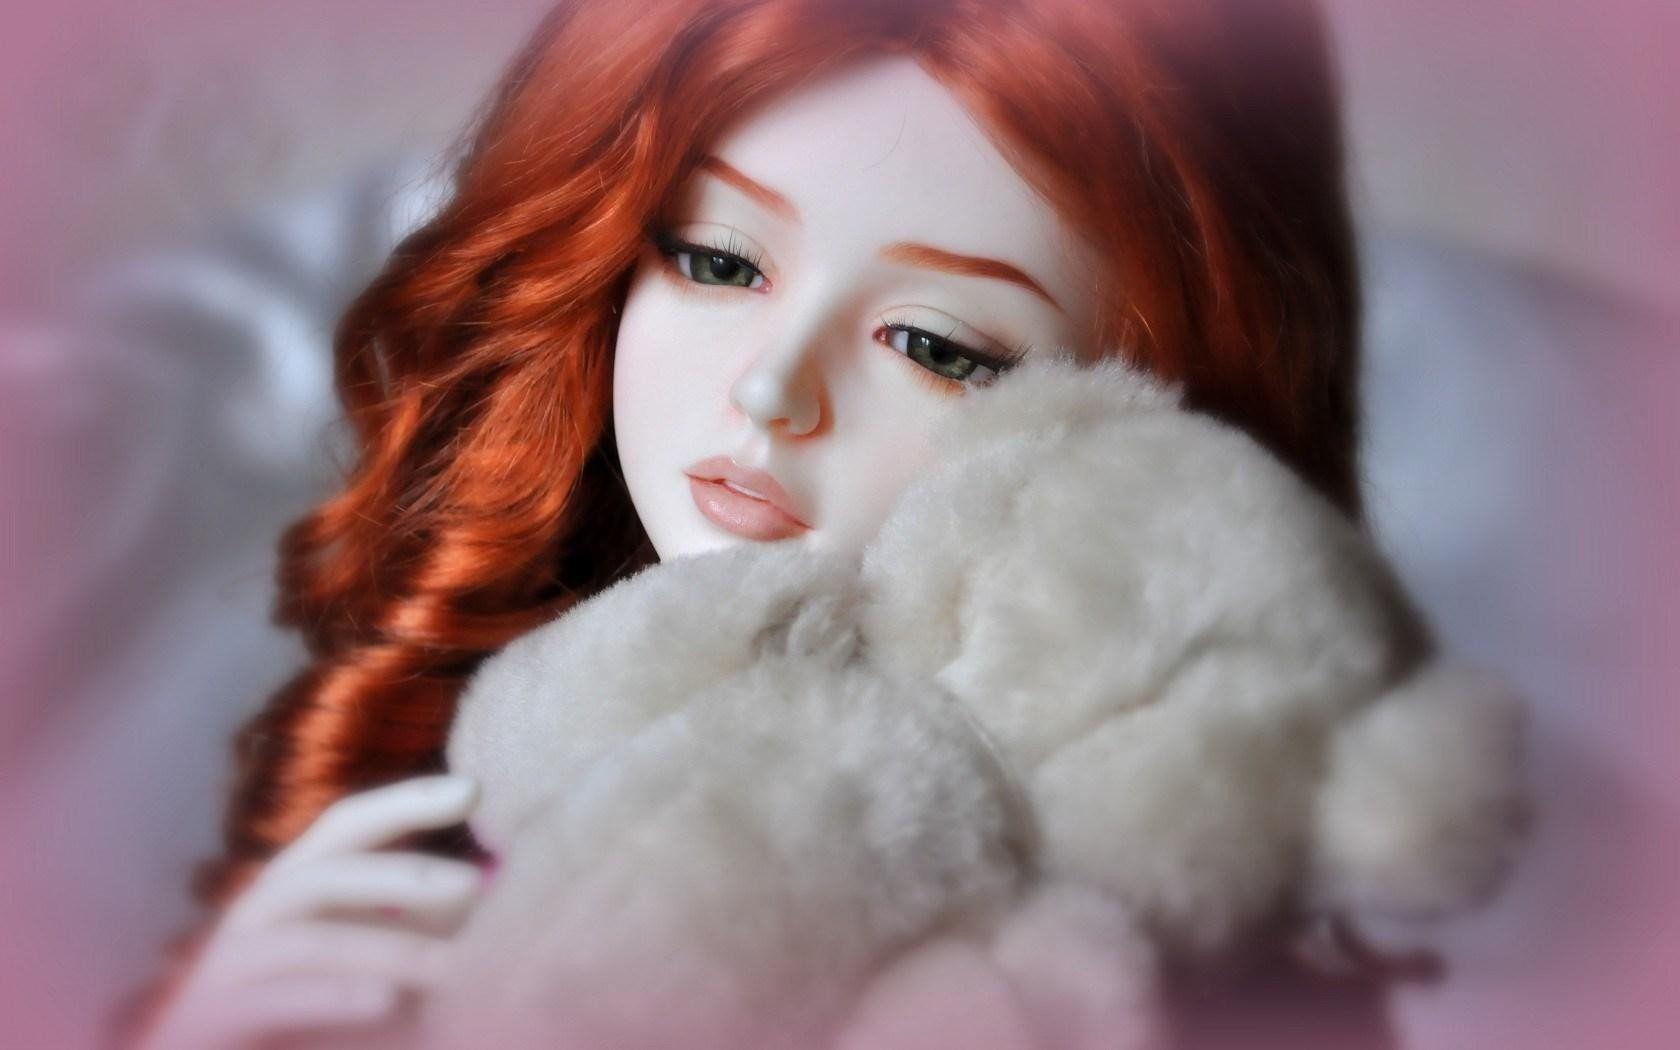 Top Best Beautiful Cute Barbie Doll HD Wallpaper Image. HD